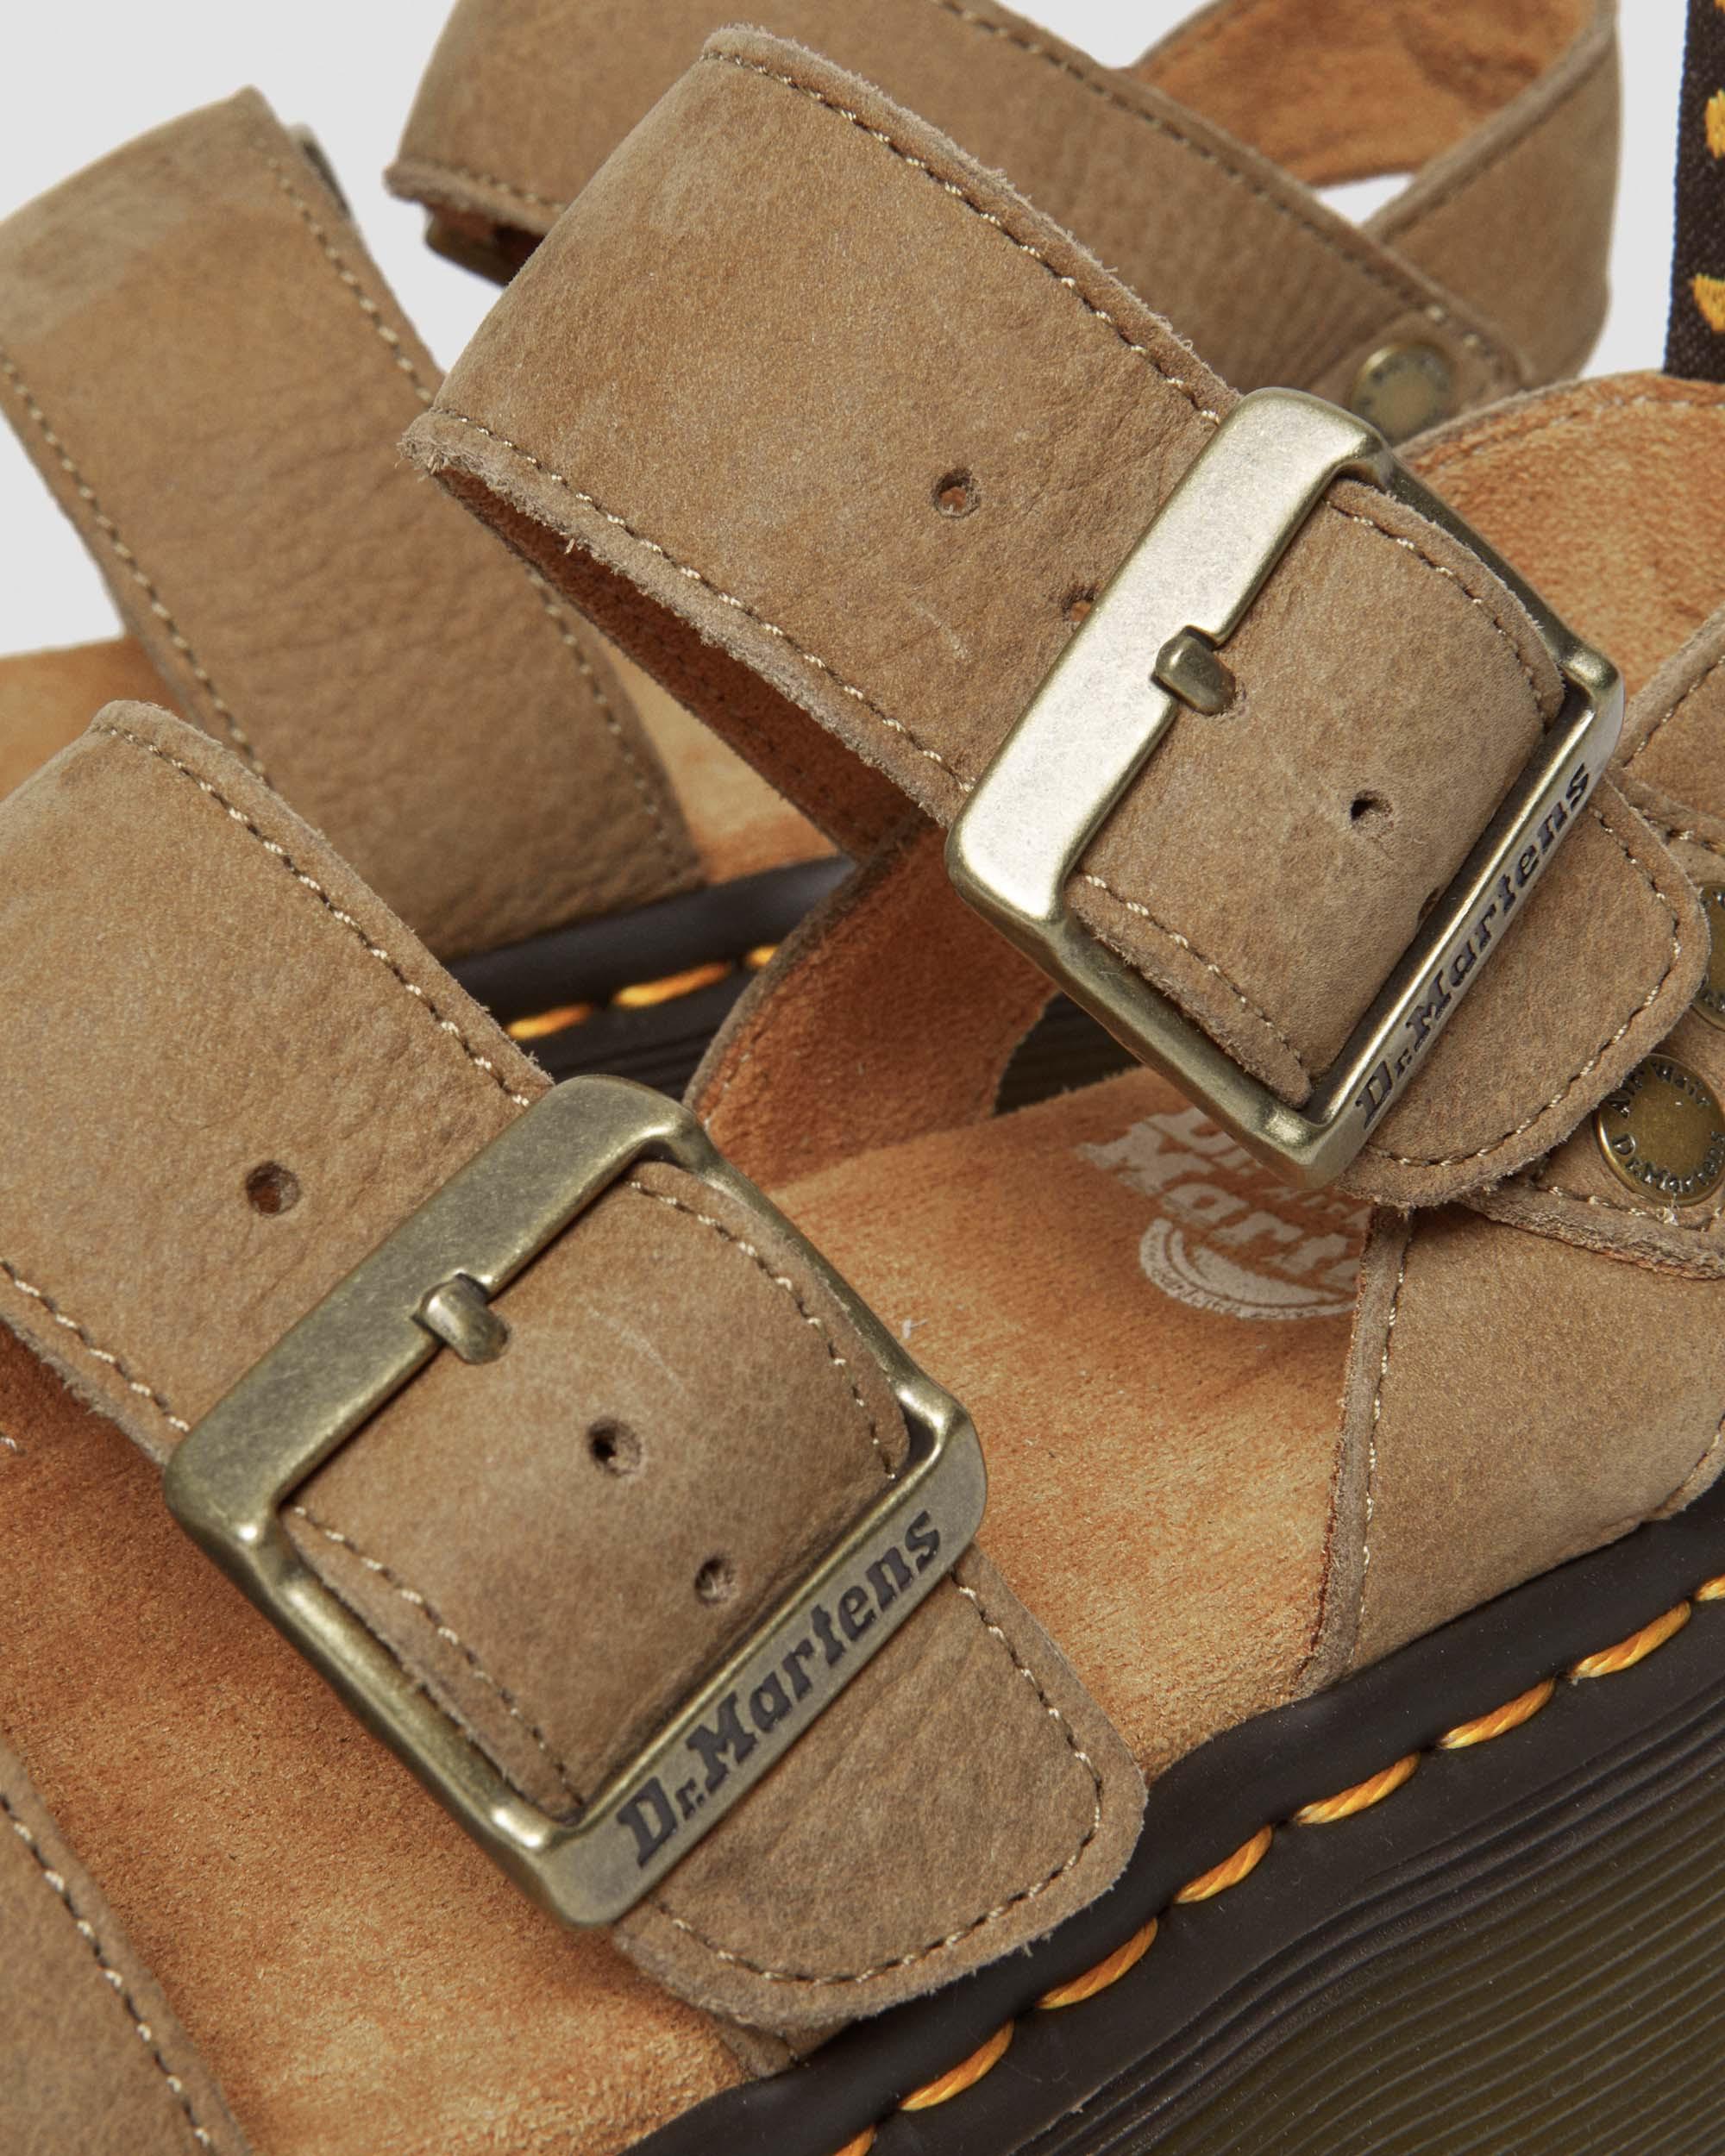 Gryphon Tumbled Nubuck Leather Platform Sandals in Savannah Tan